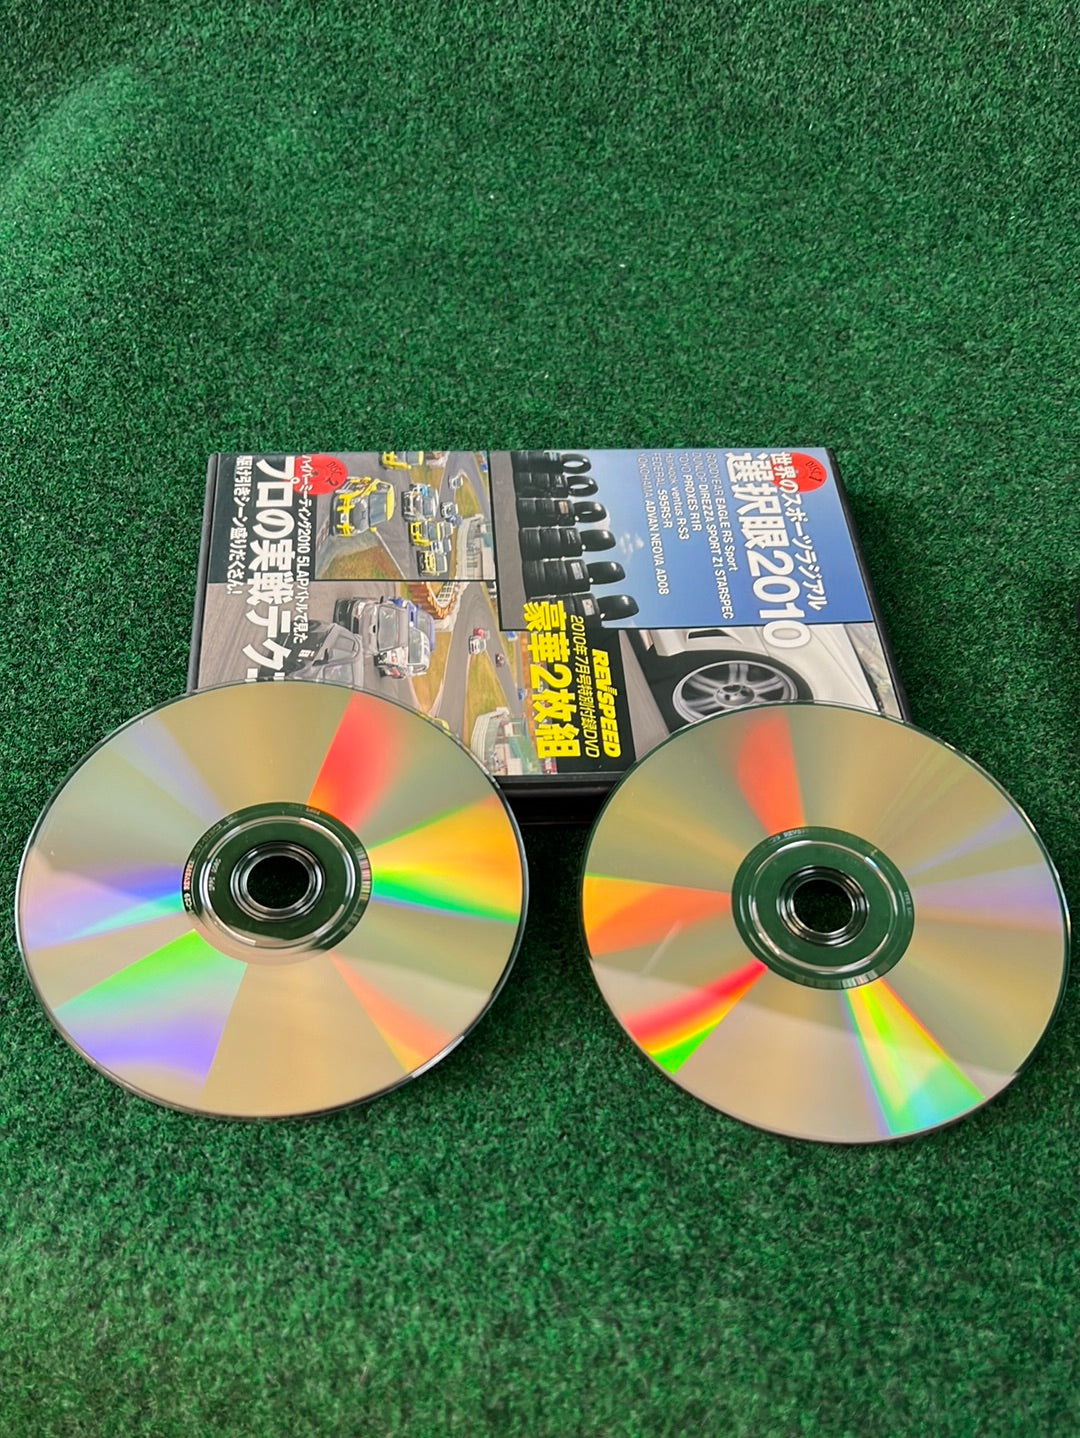 REVSPEED DVD - Vol. 15 & 16 Set of 2